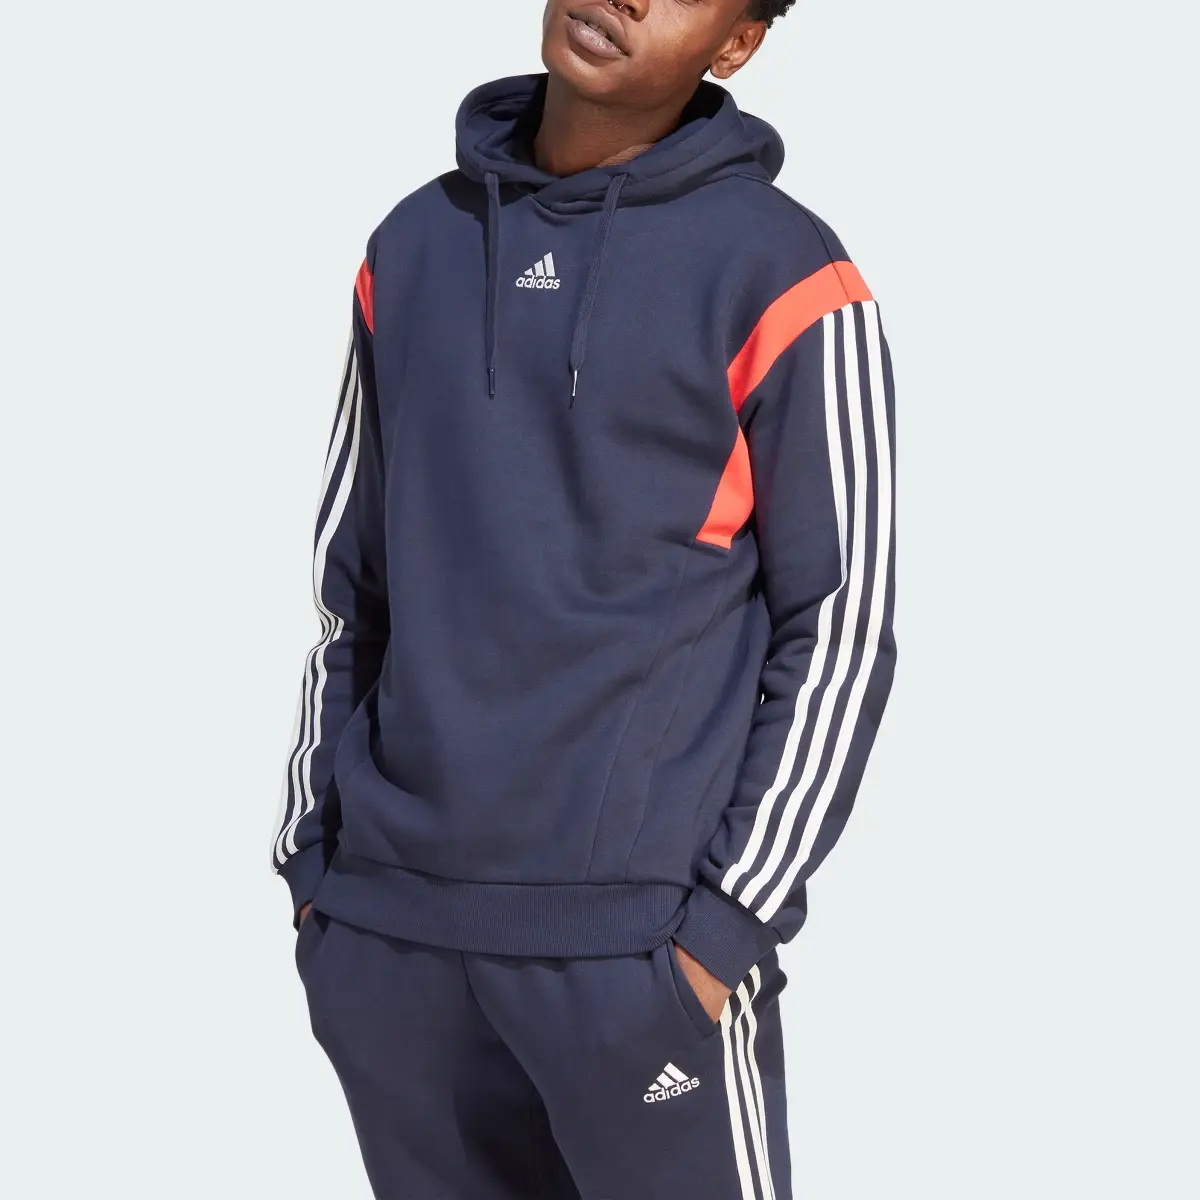 Adidas Sweatshirt com Capuz. 1